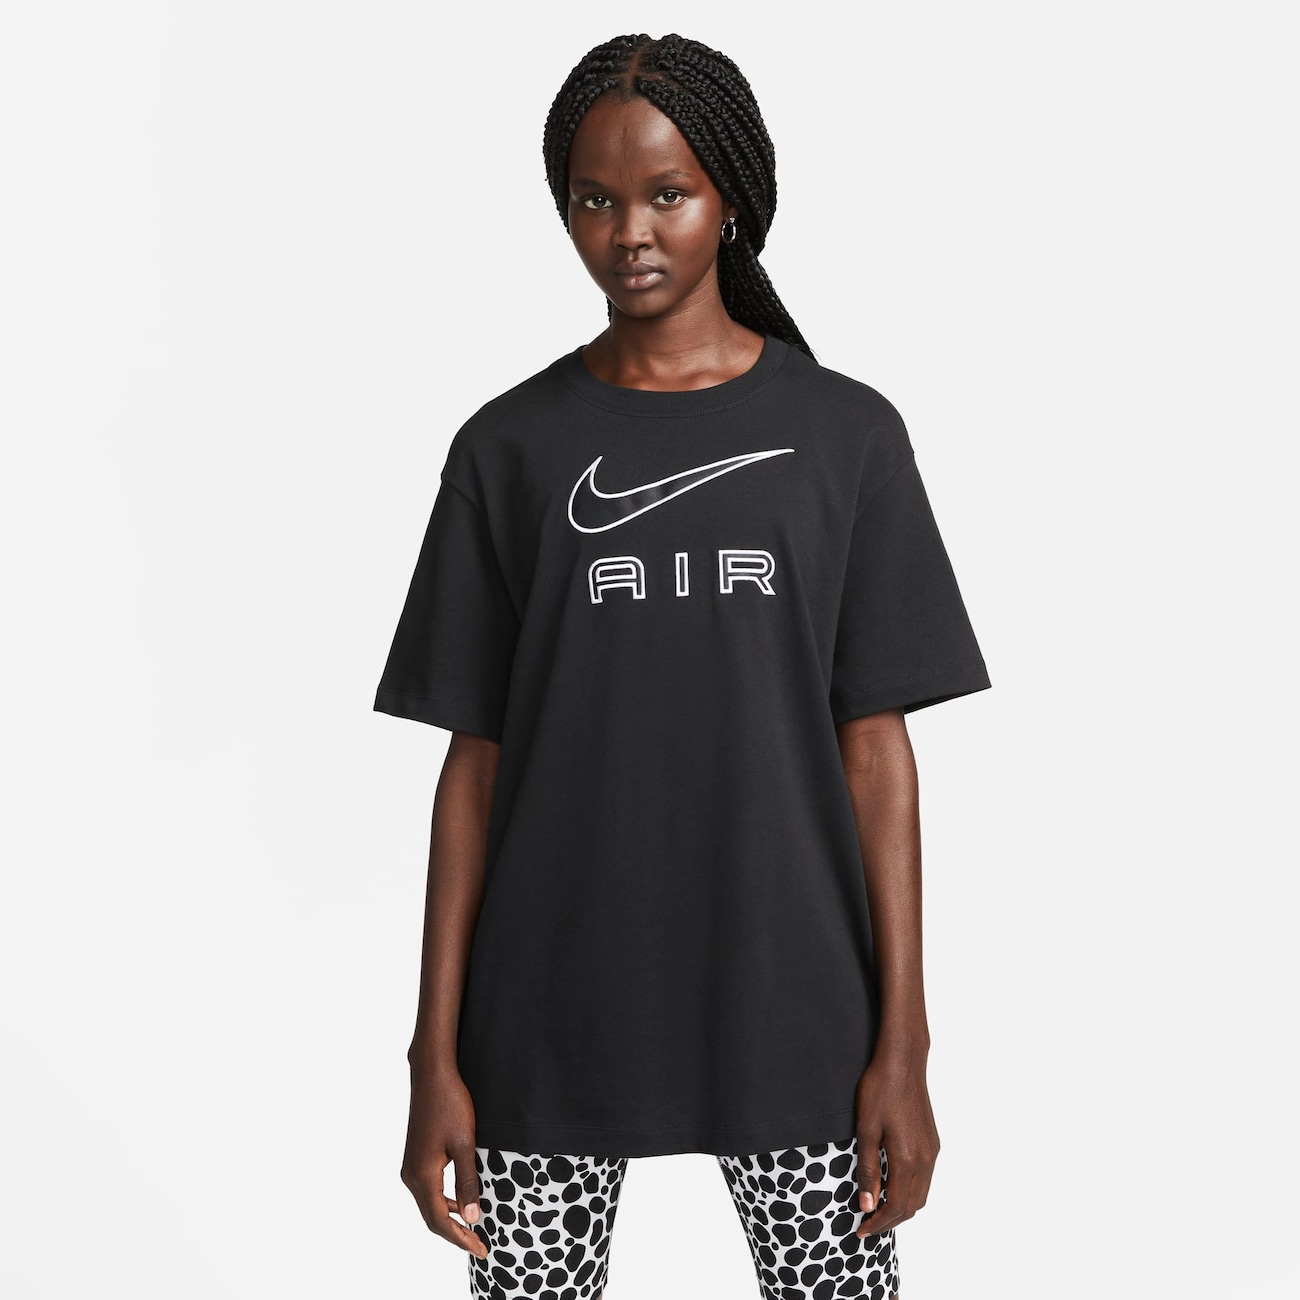 Camiseta Nike Air Feminina